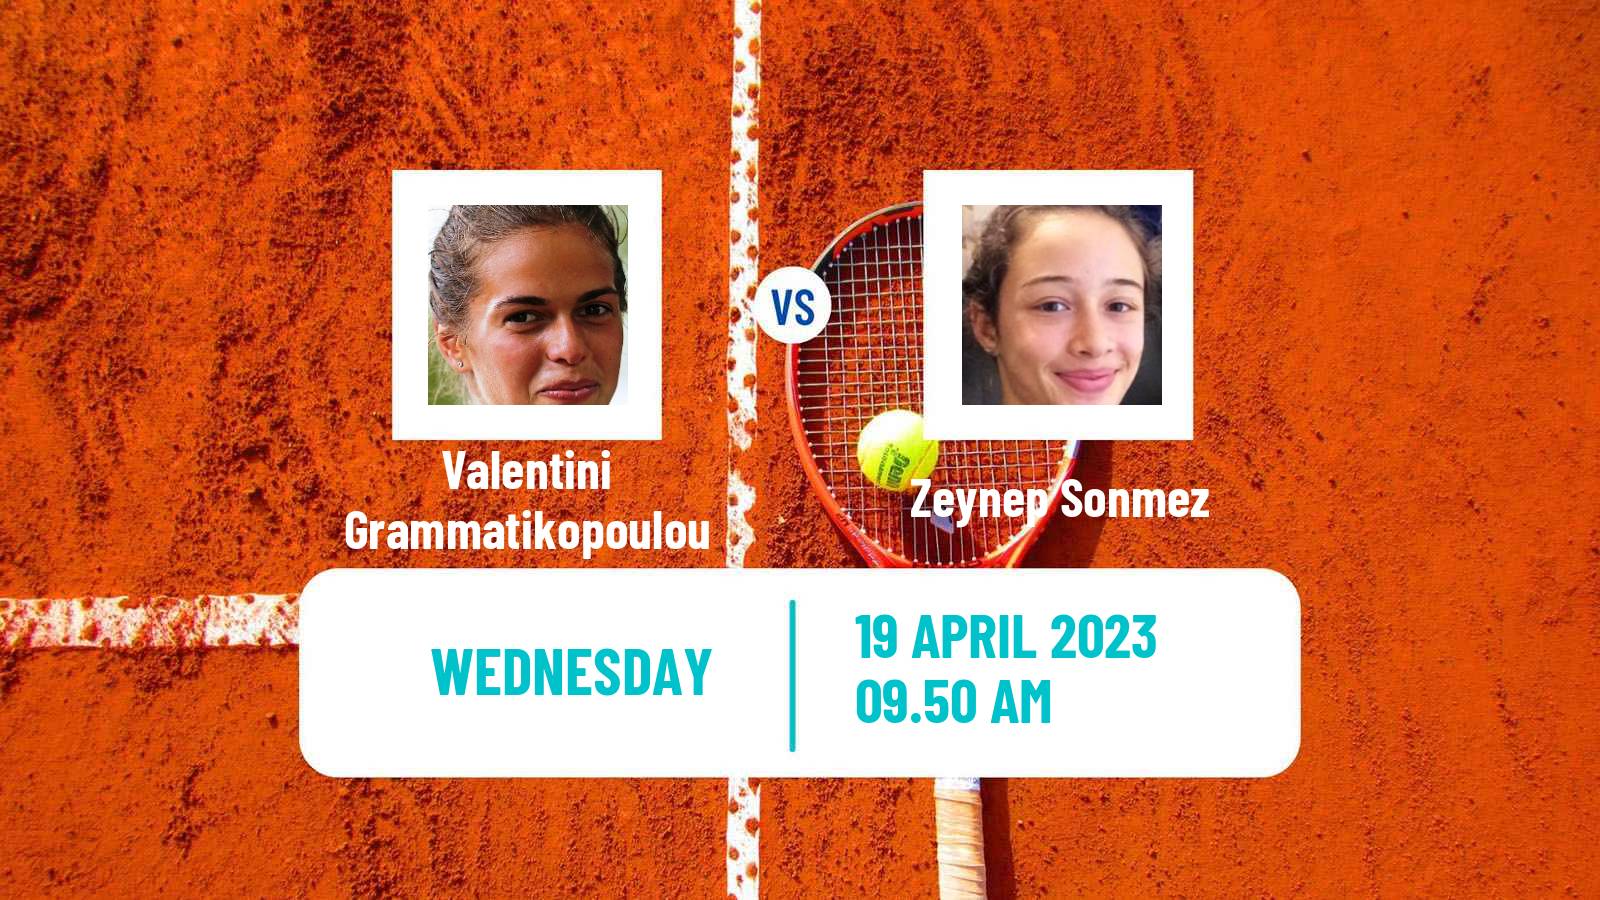 Tennis ITF Tournaments Valentini Grammatikopoulou - Zeynep Sonmez